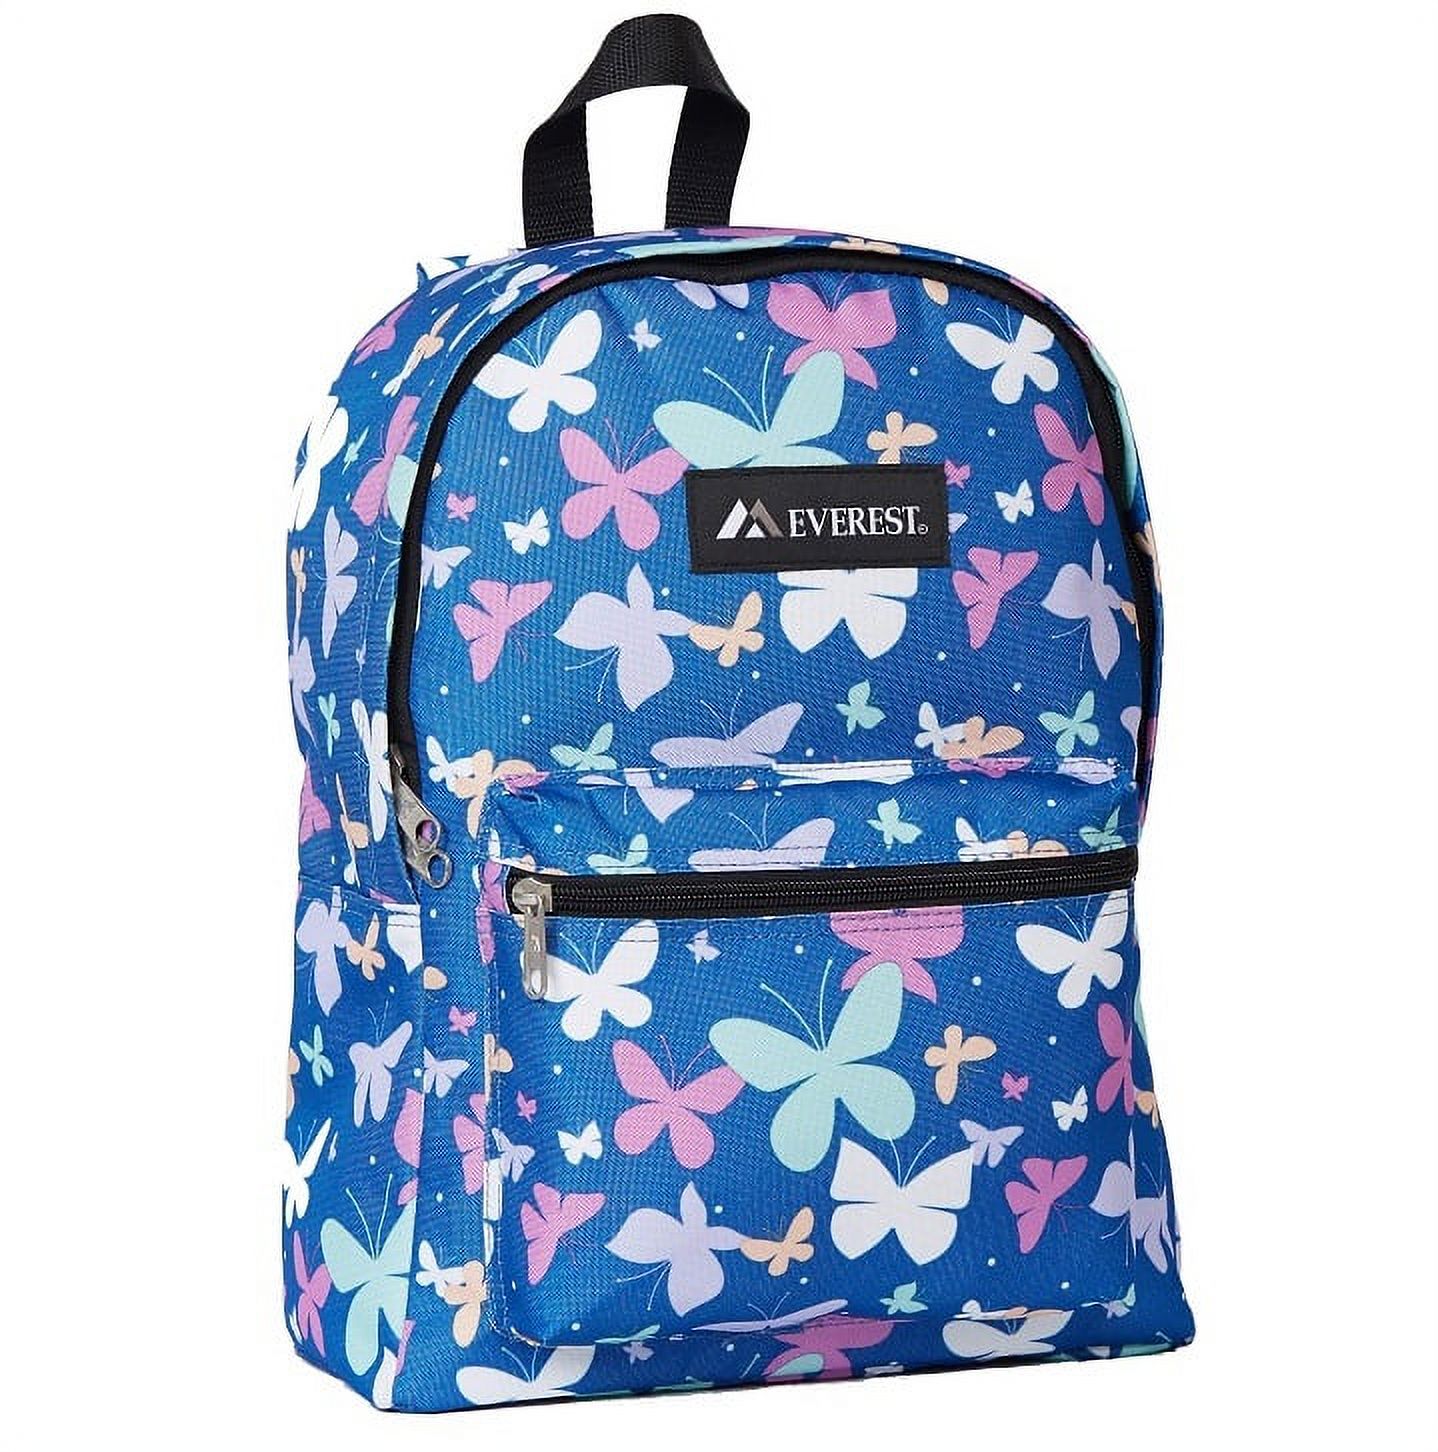 Everest Unisex Basic 15" Backpack, Butterfly Pattern Basic Blue - image 1 of 6